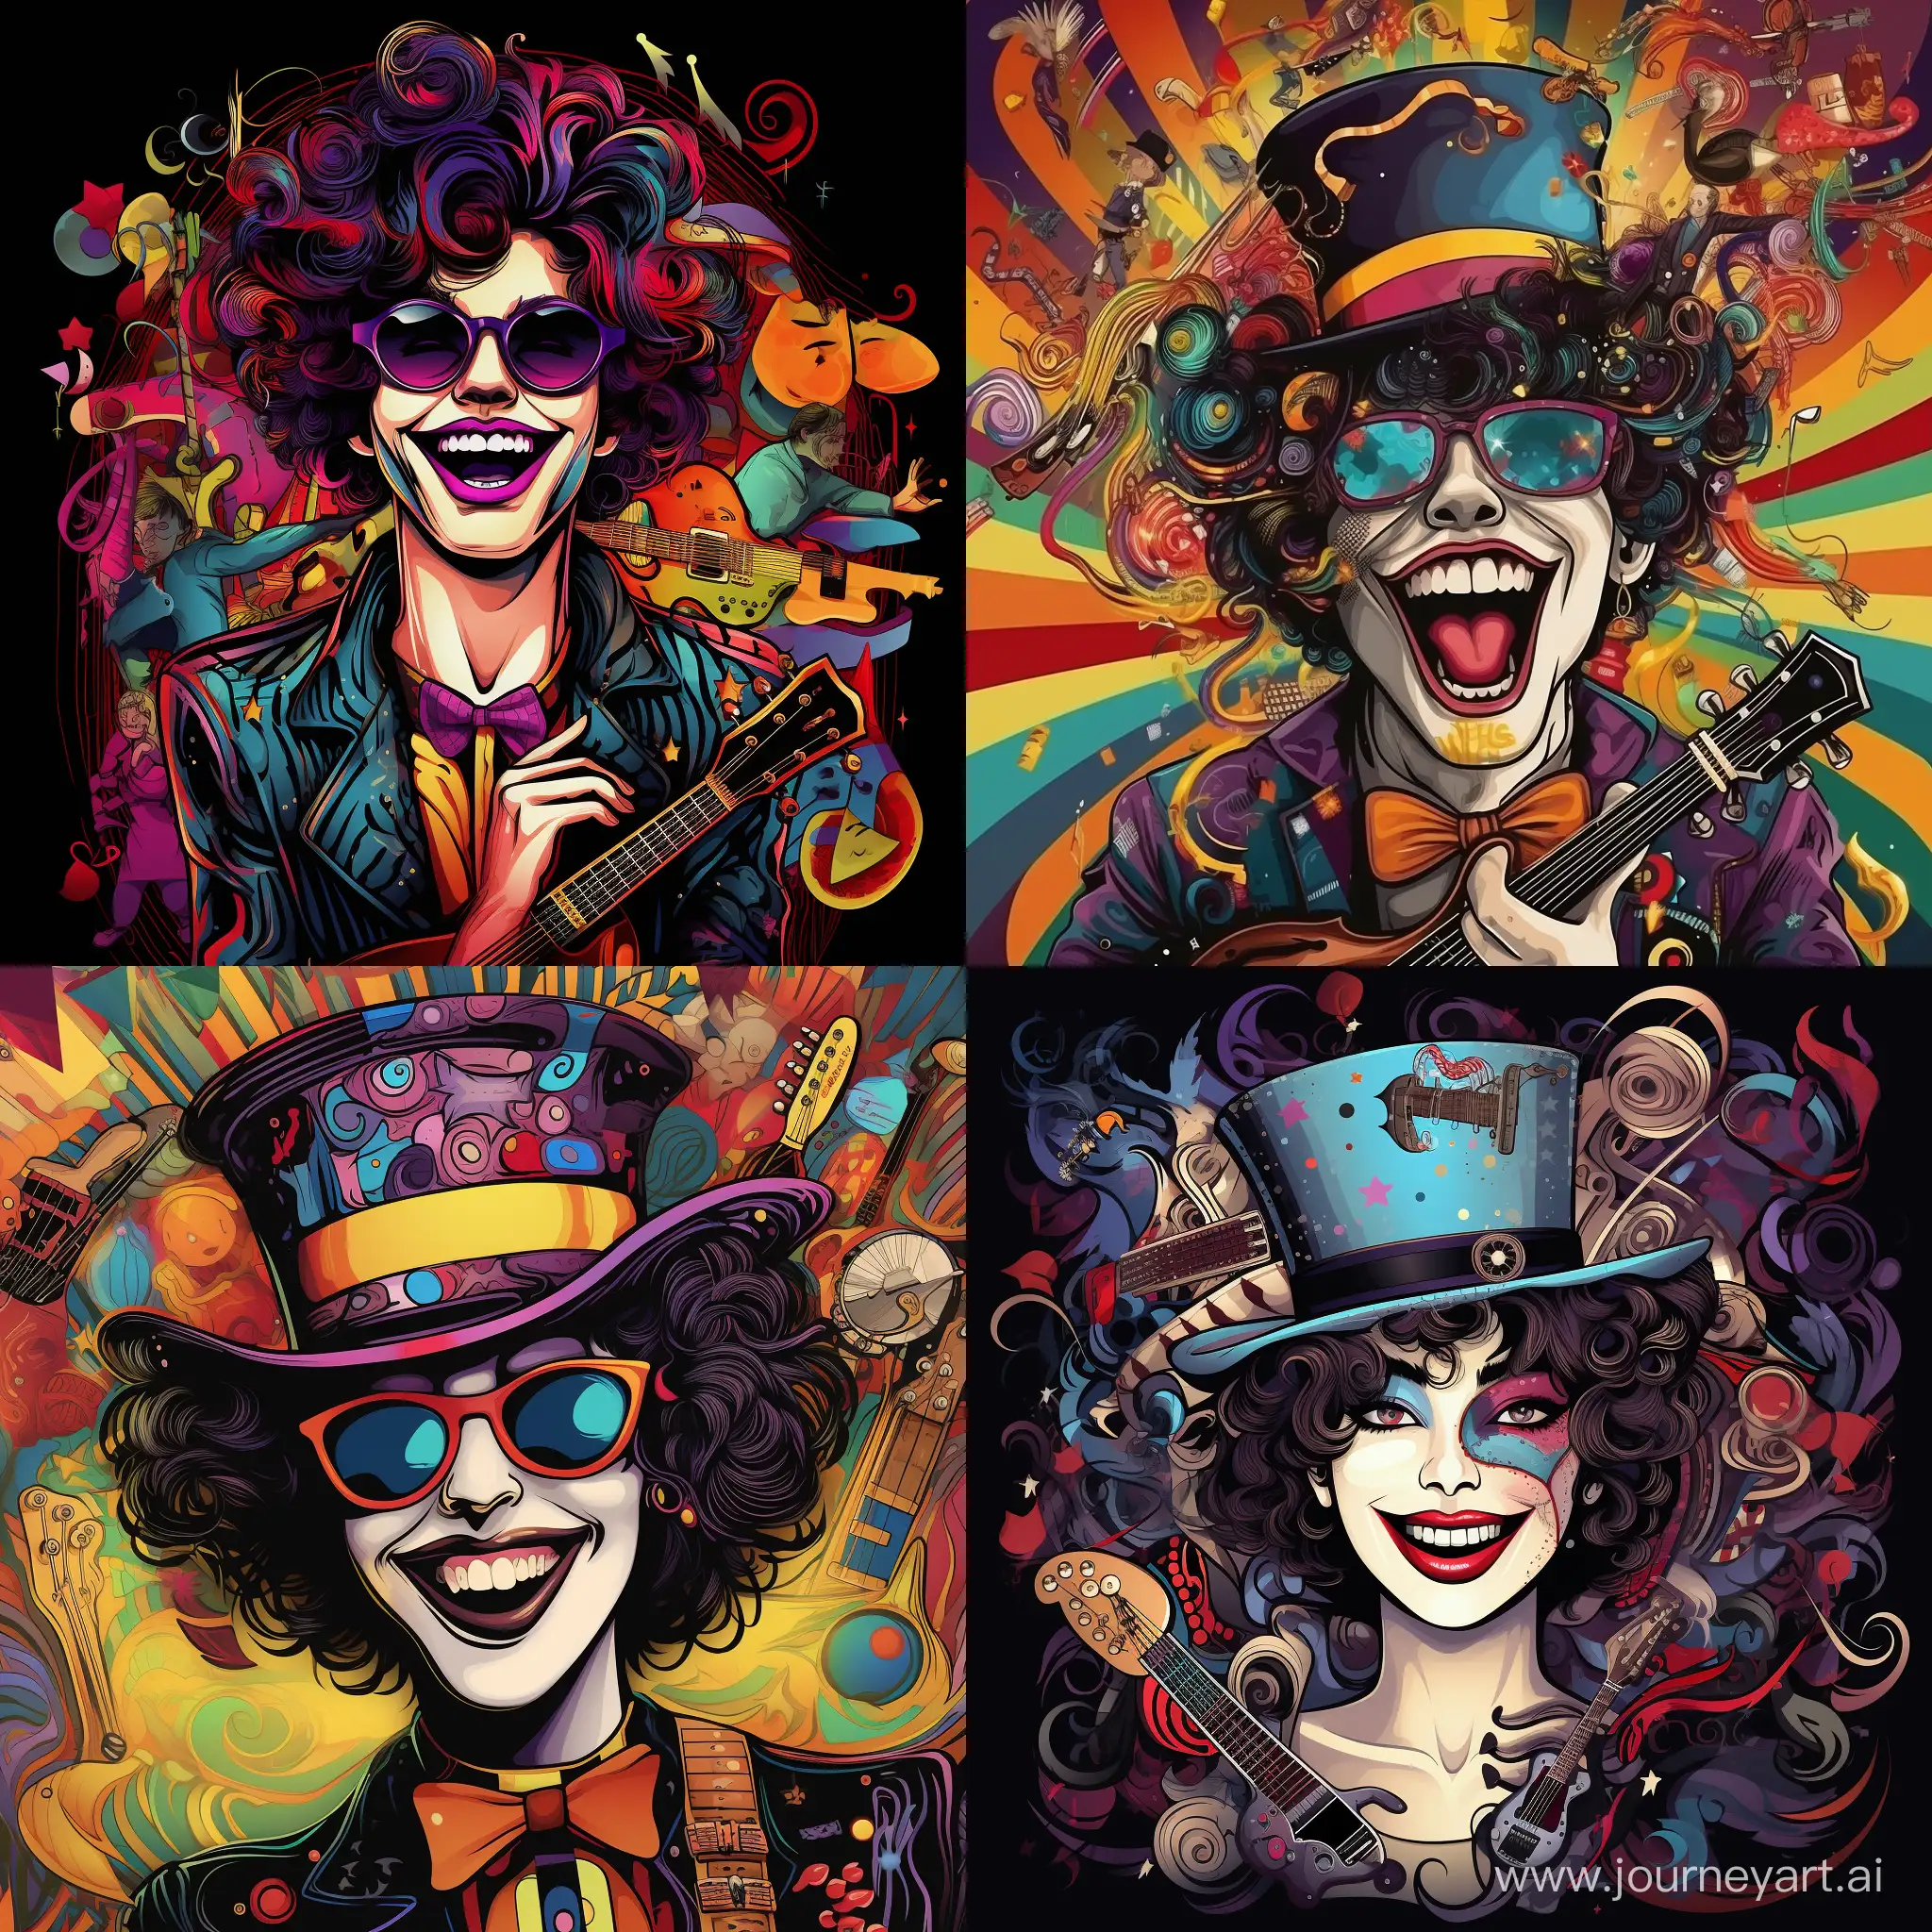 Joyful-Musician-Joker-Amidst-Musical-Symbols-in-Vibrant-Pop-Art-Portrait